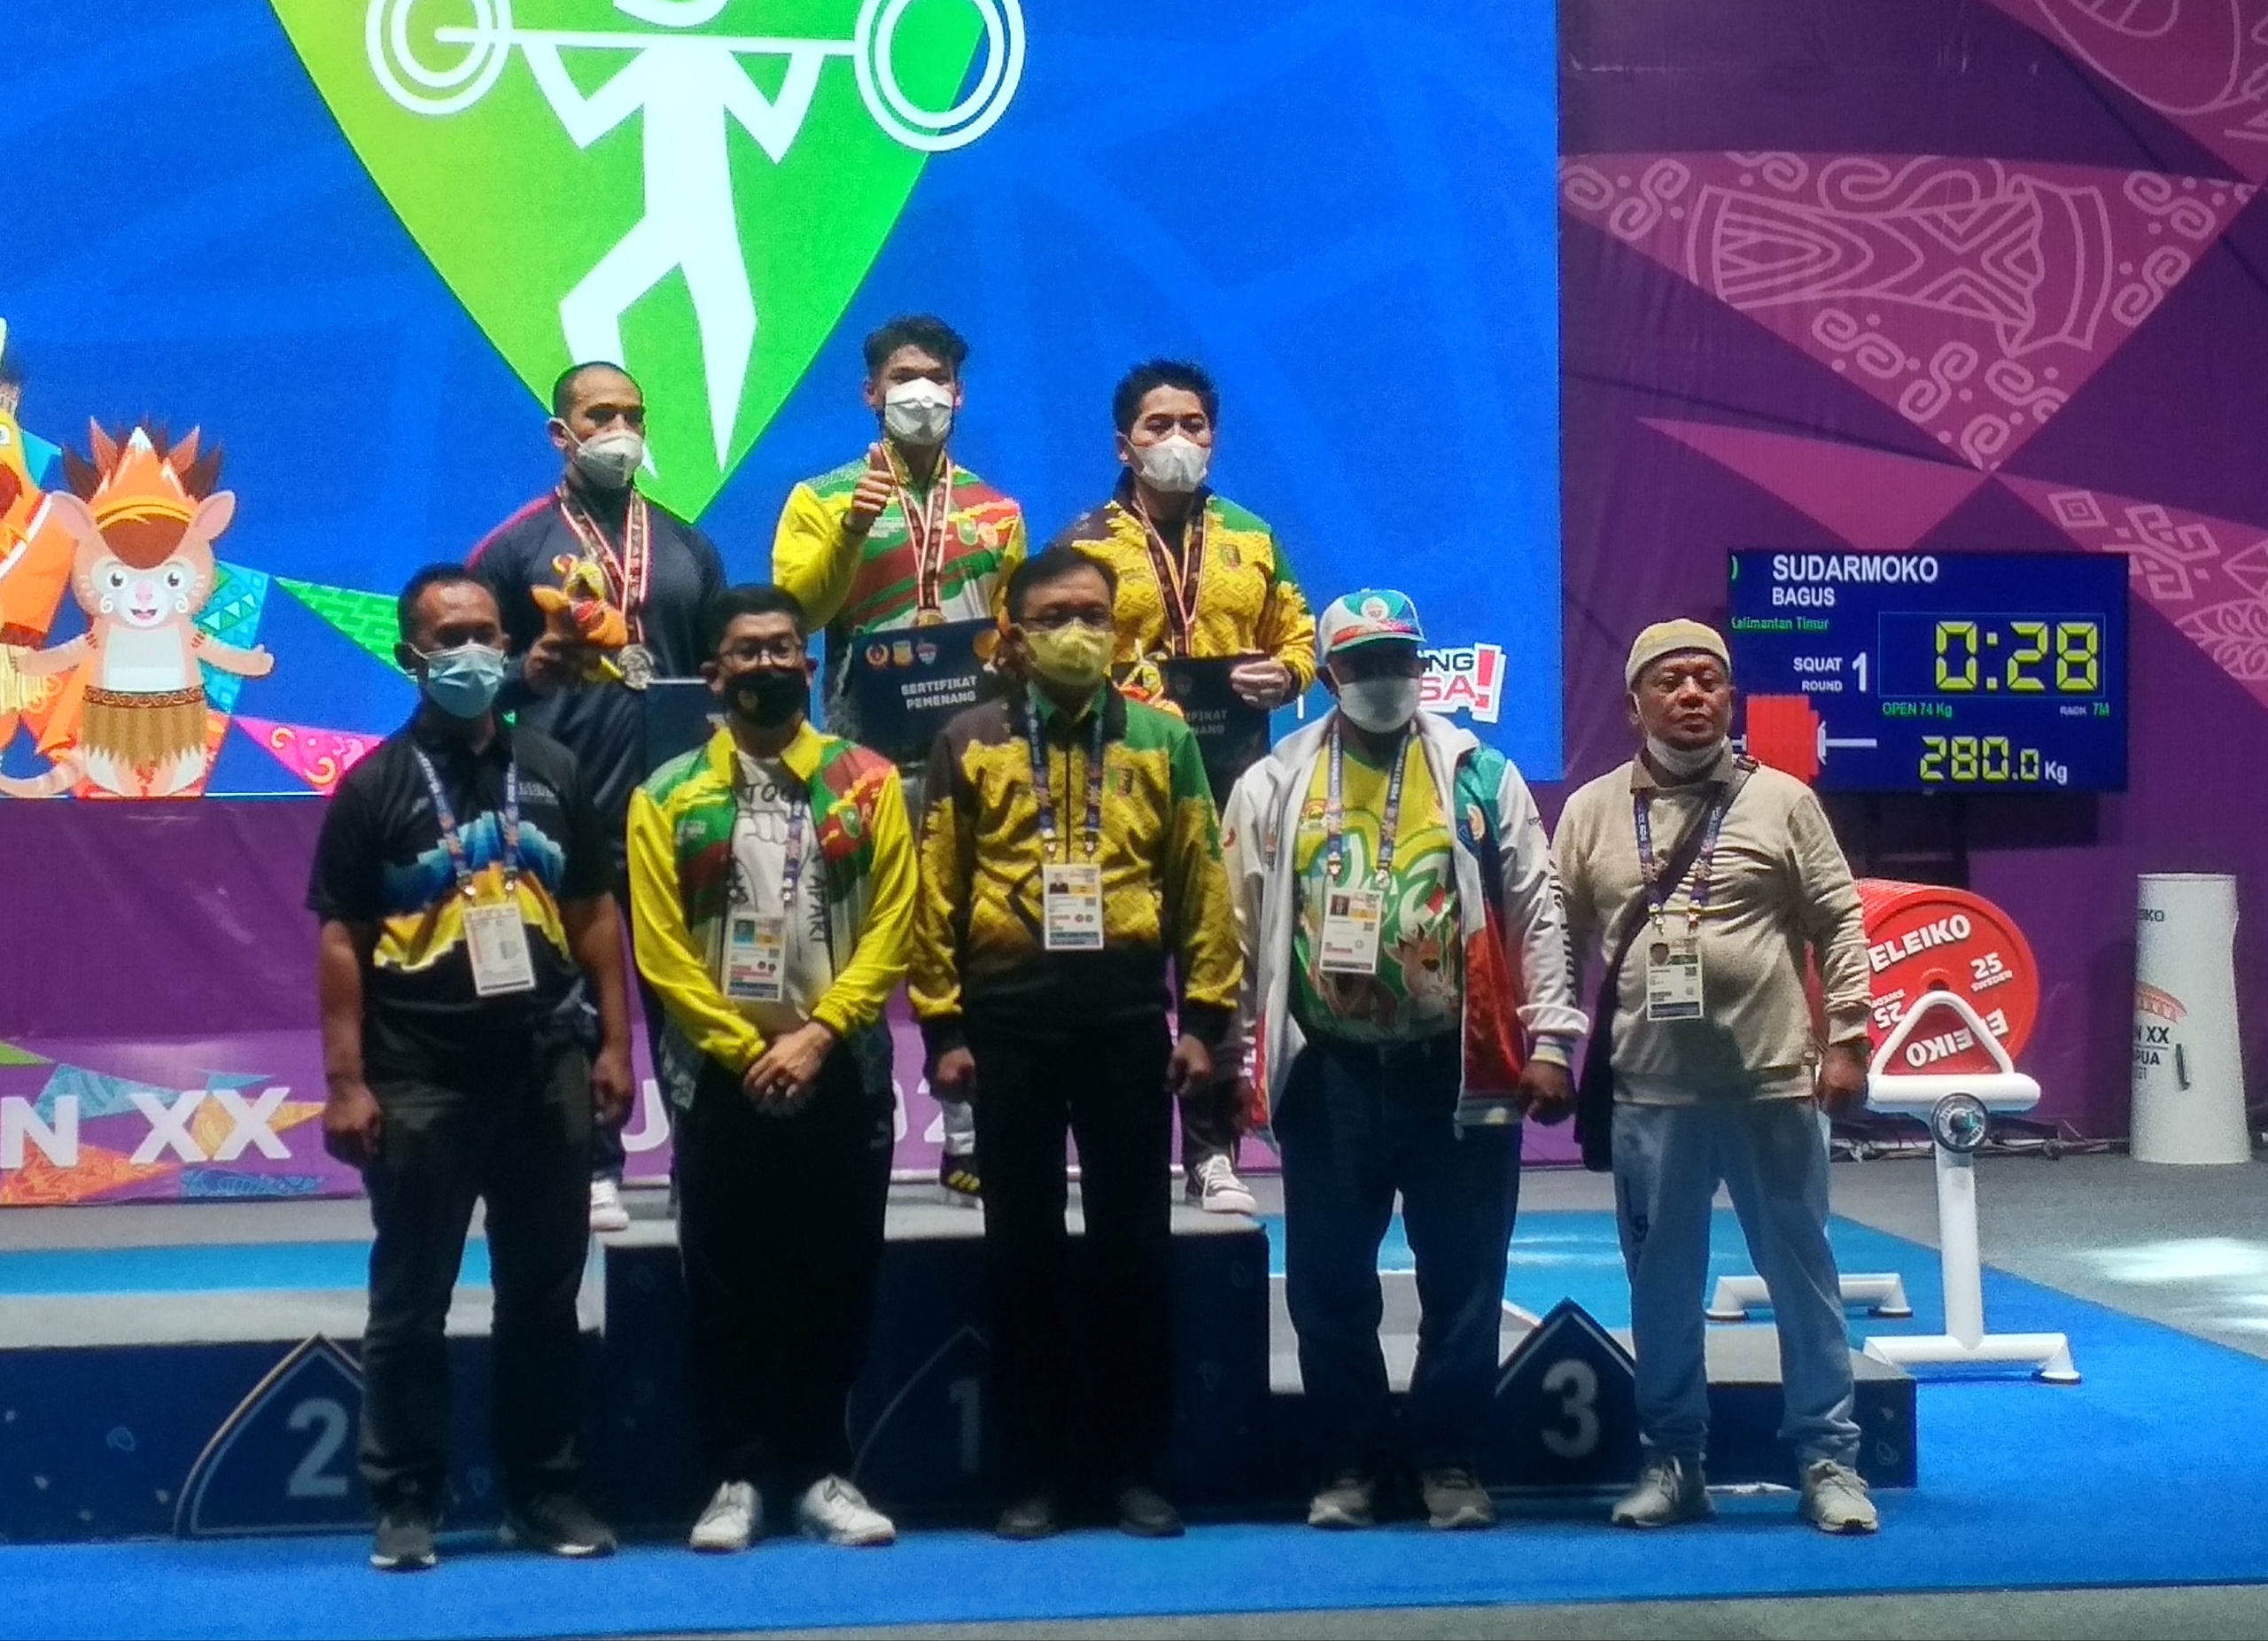 Kalahkan Juara Dunia, Atlet Angkat Berat Riau Andre Satria Raih Medali Emas